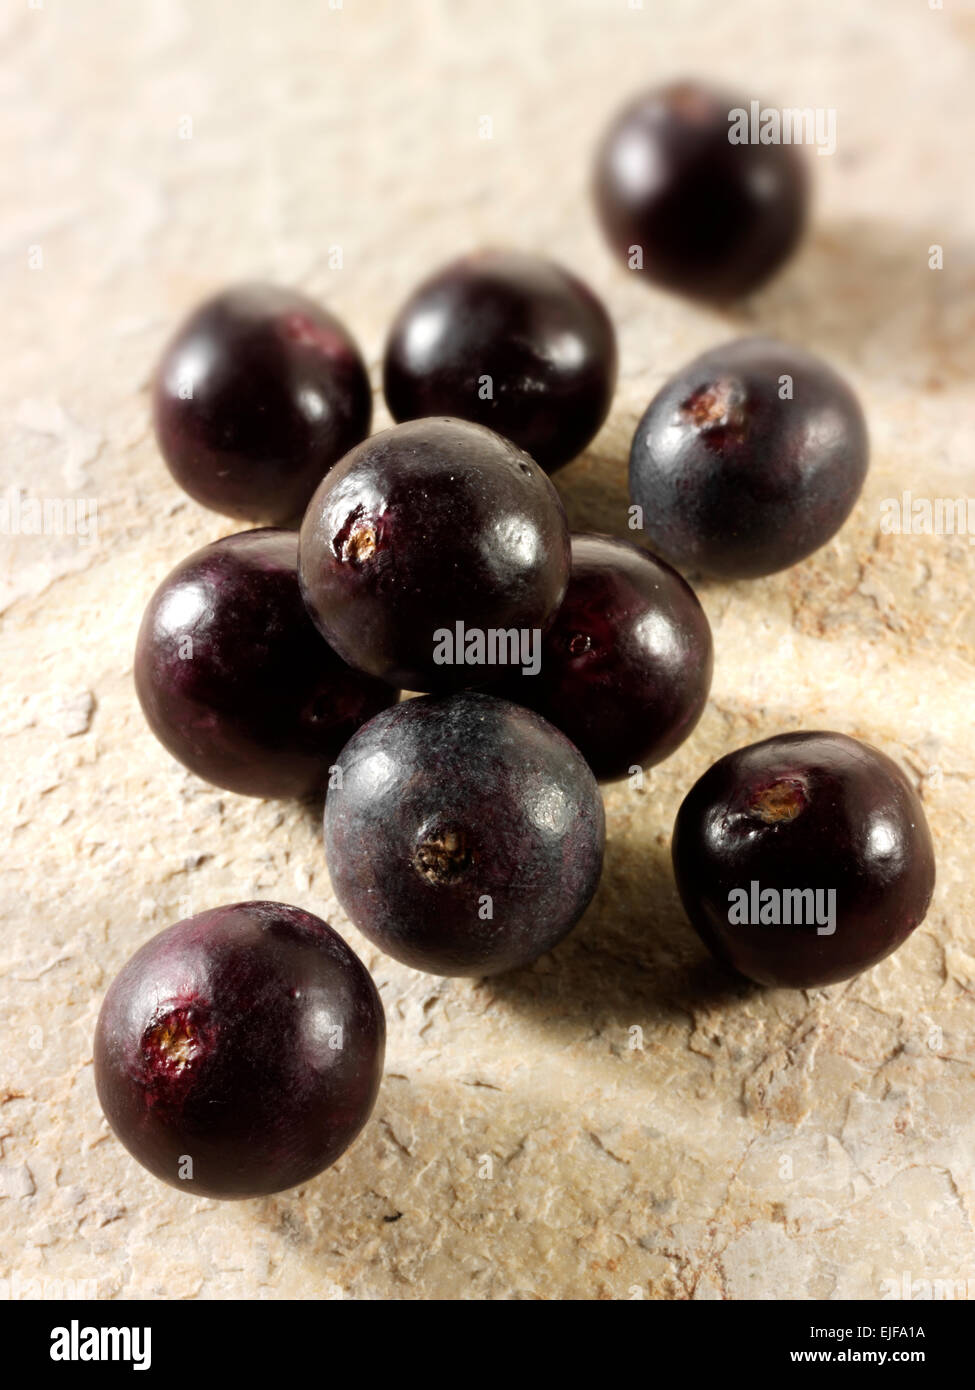 Whole fresh Acai (Açai) berry fruits Stock Photo